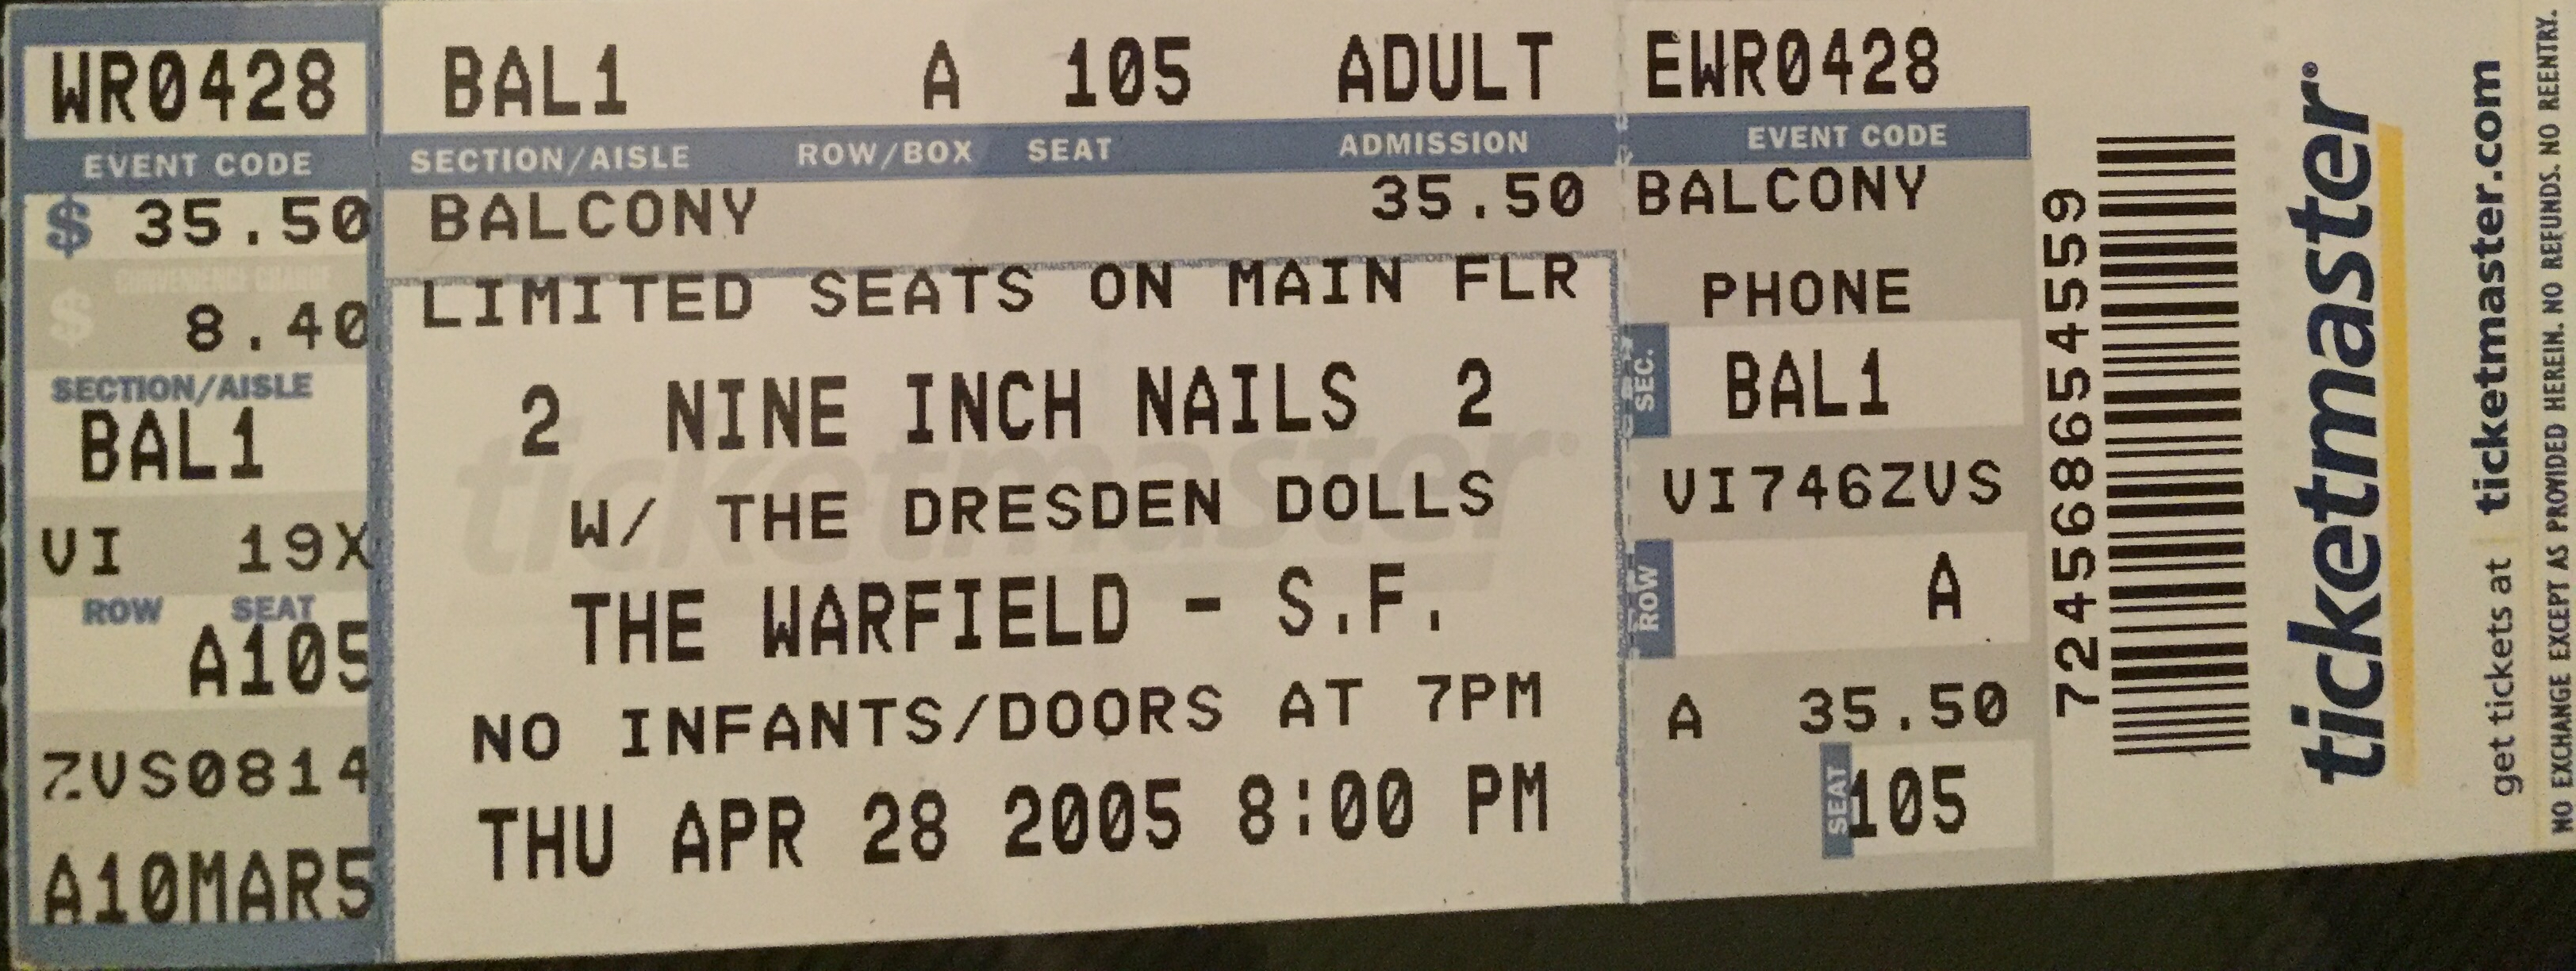 2005/04/28 Ticket